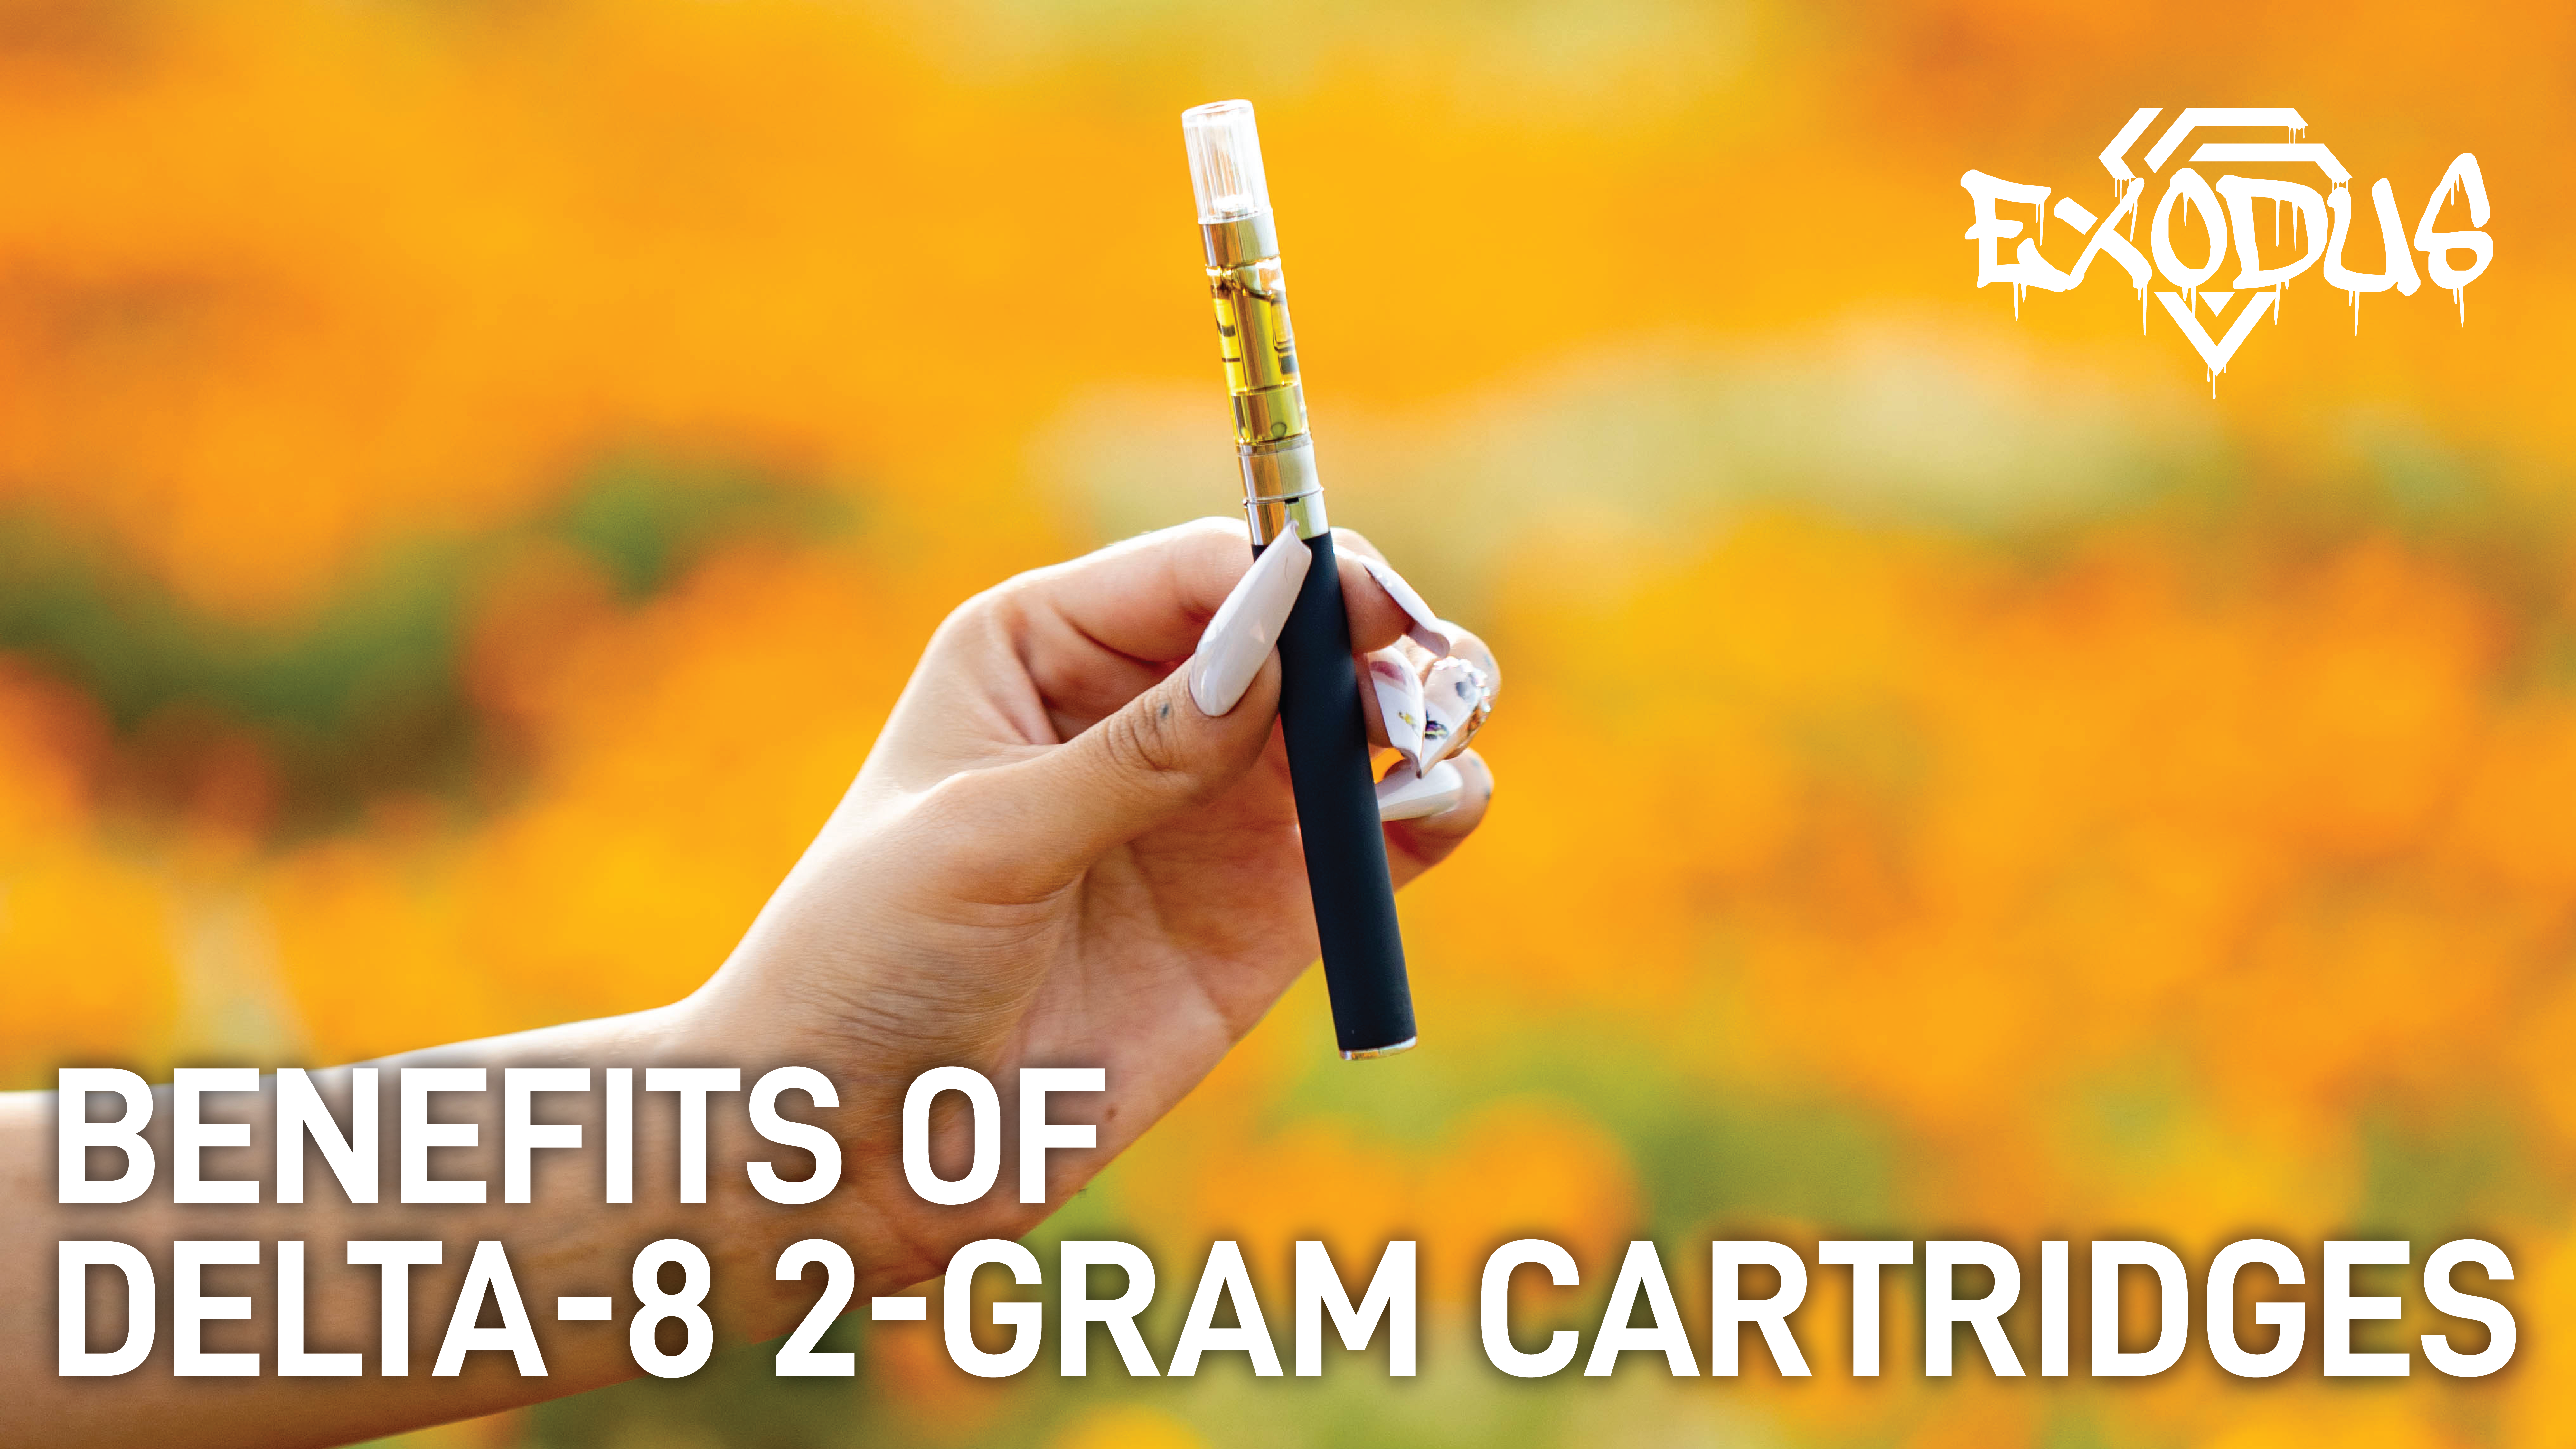 Benefits of 2 gram delta-8 cartridges